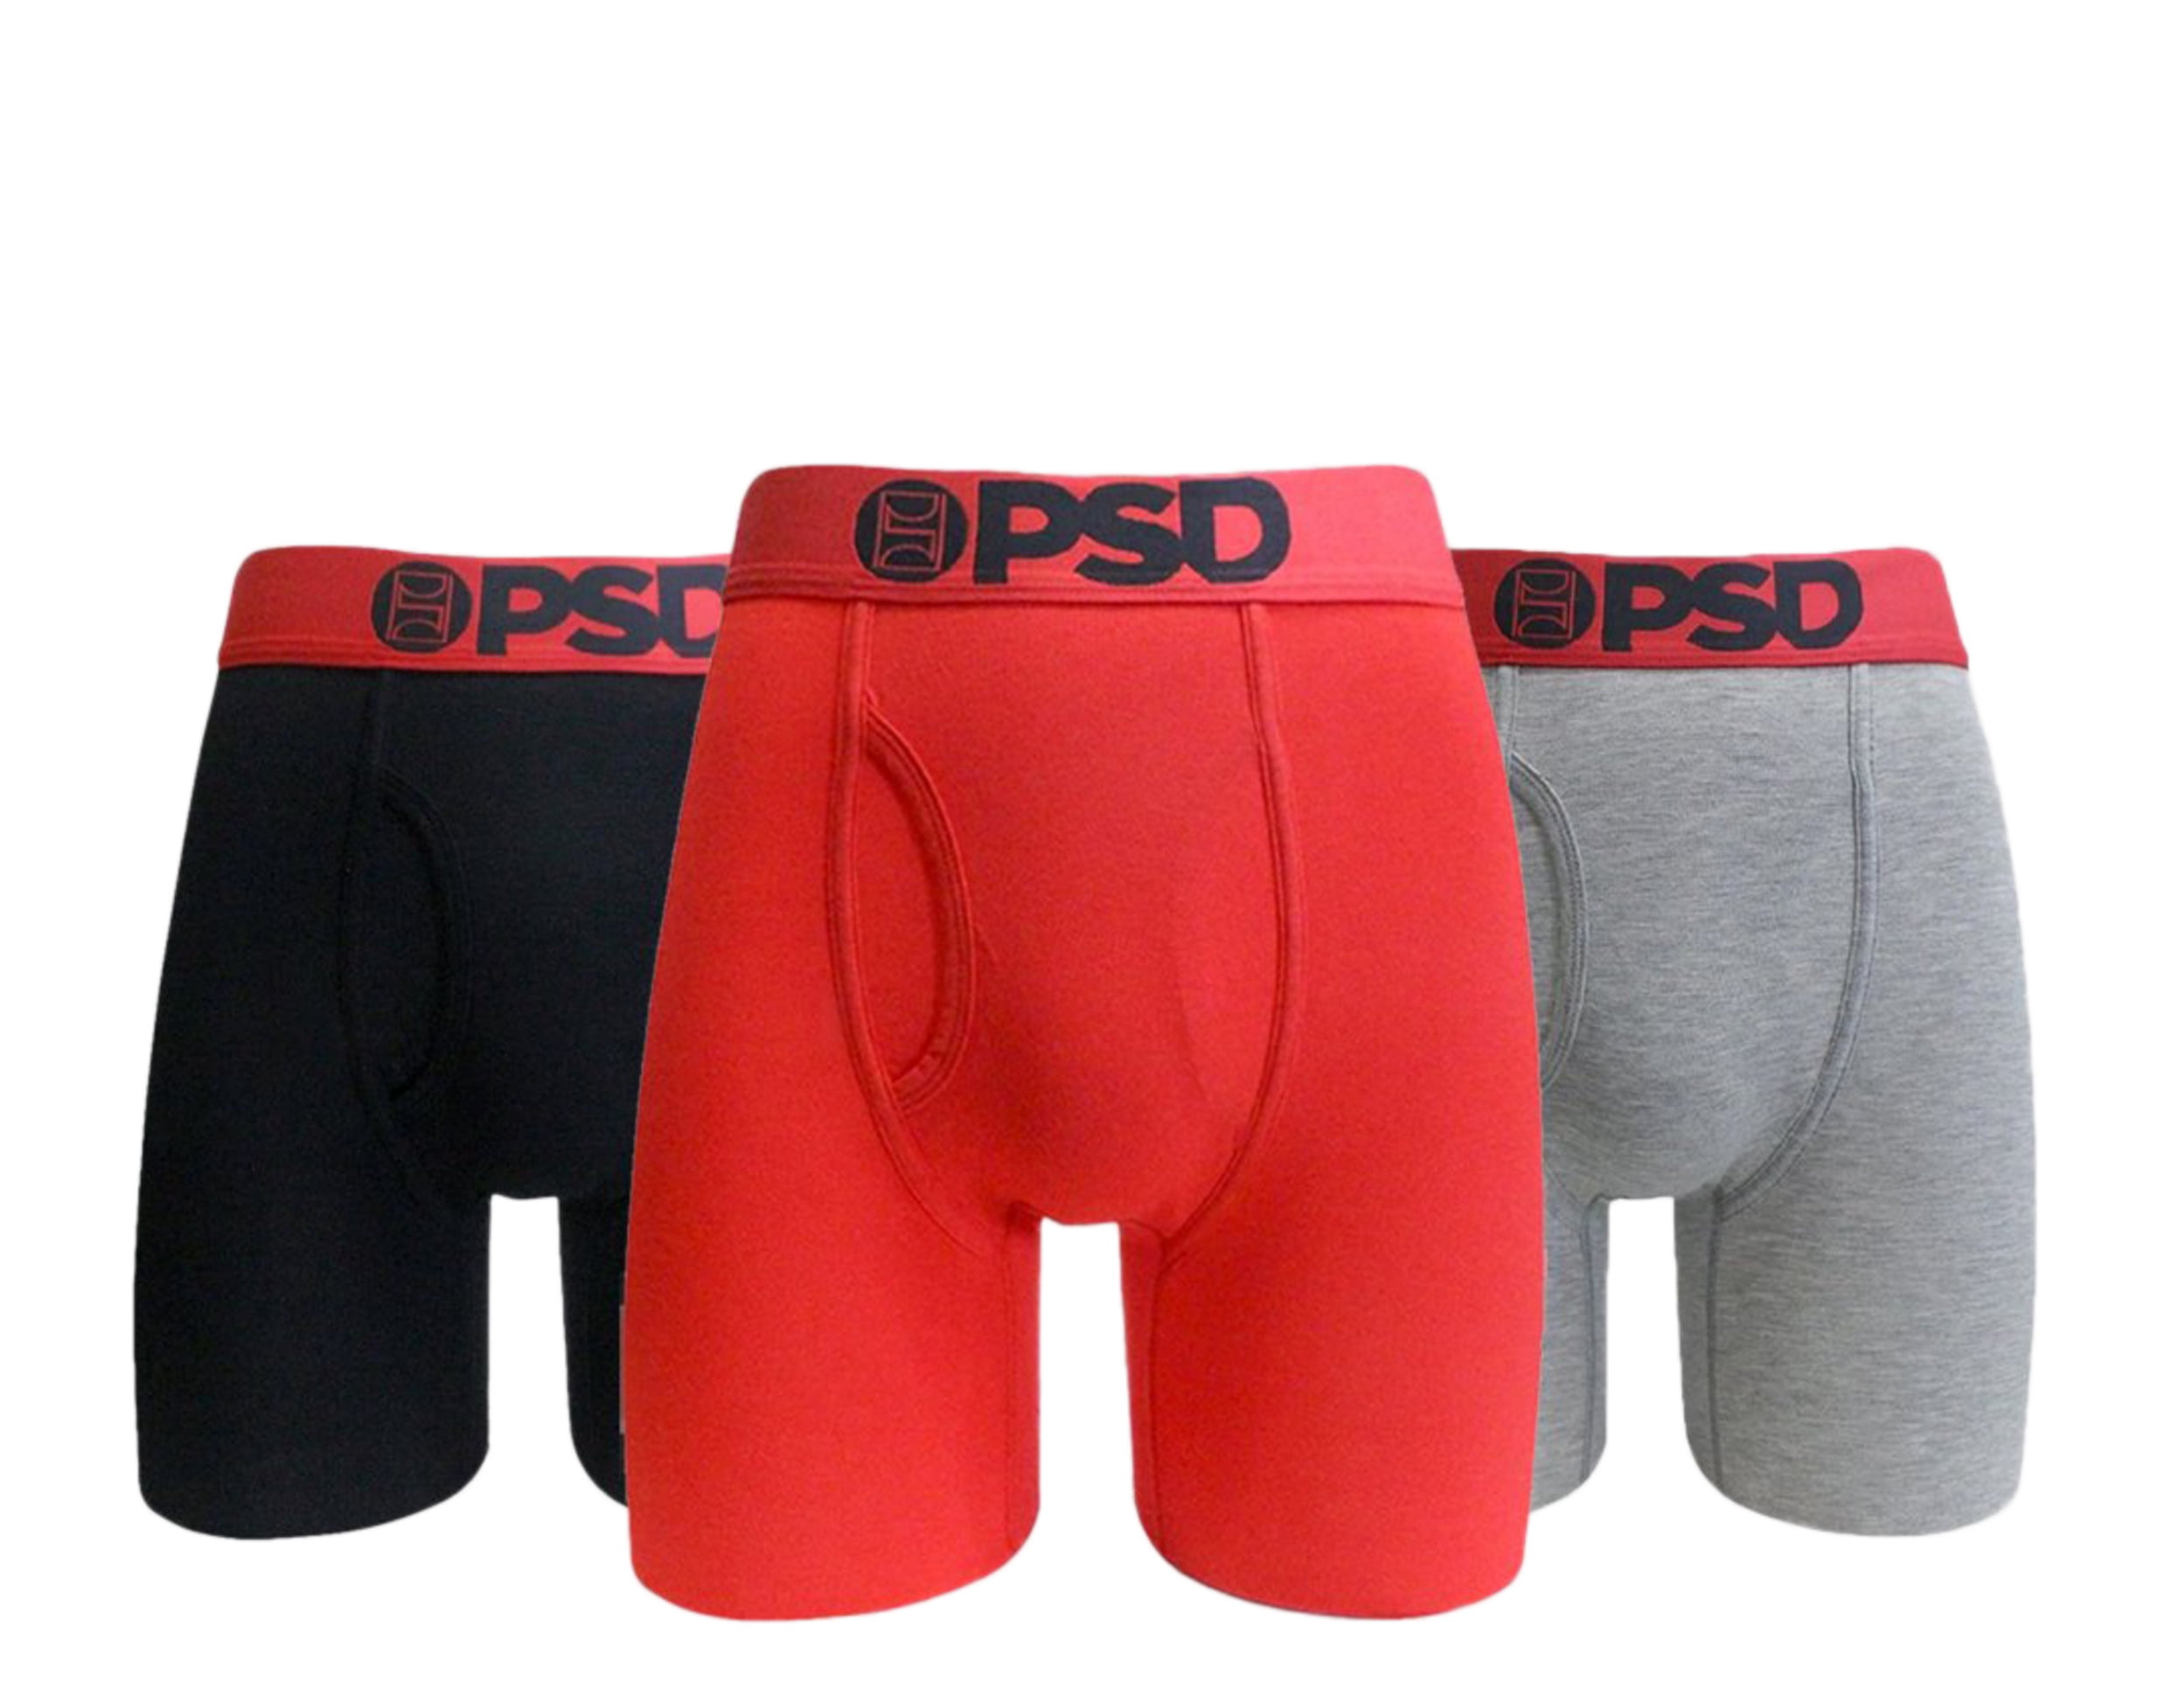 PSD Model - 3 Pack Boxer Briefs Men's Underwear Large 